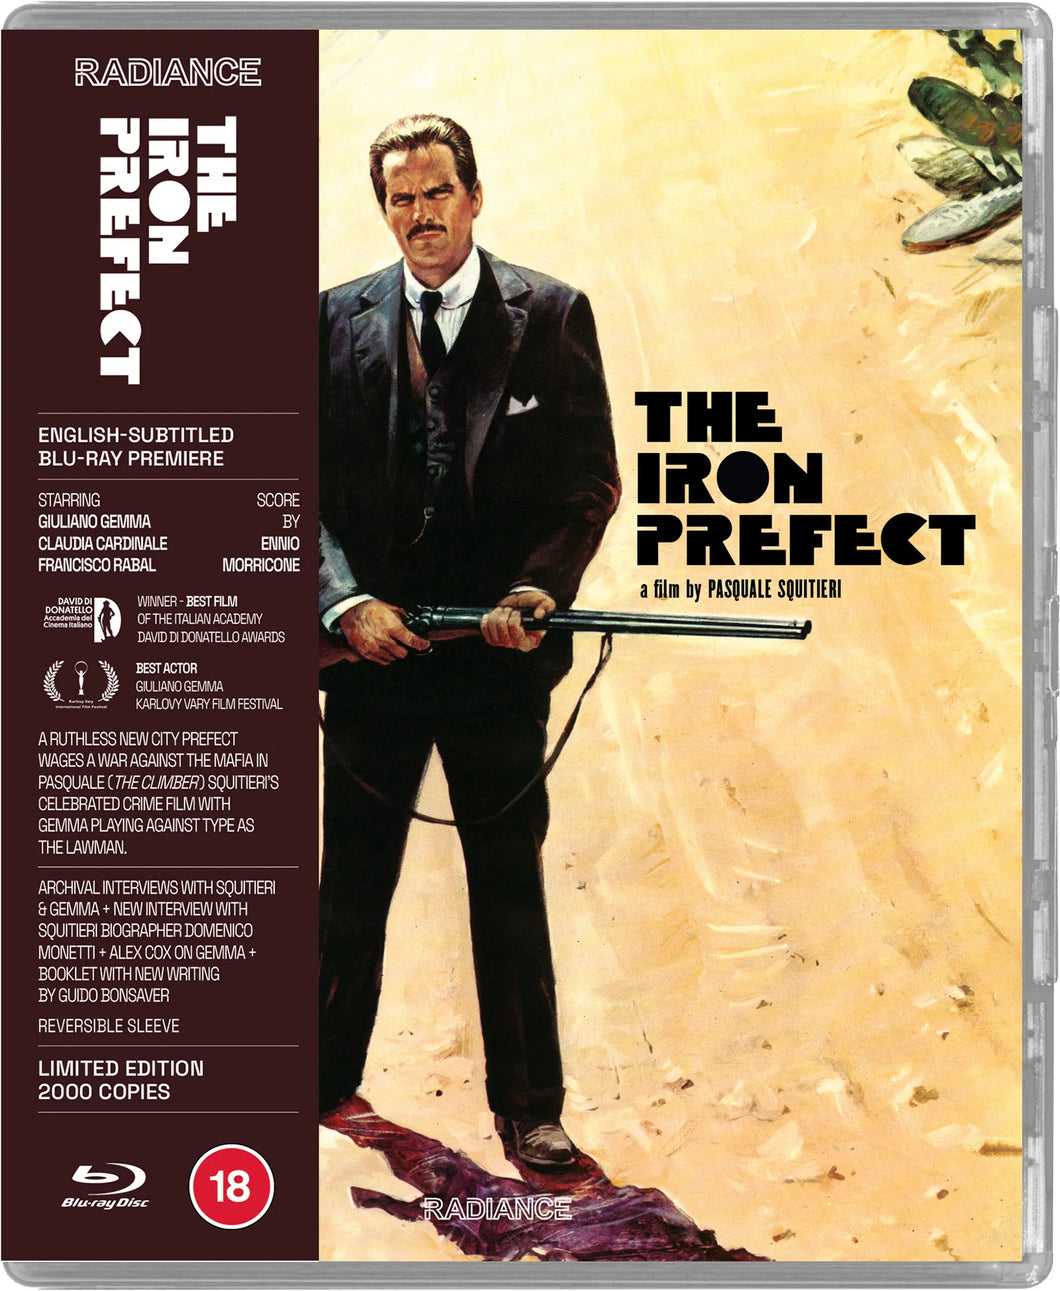 The Iron Prefect (1977) de Pasquale Squitieri - front cover